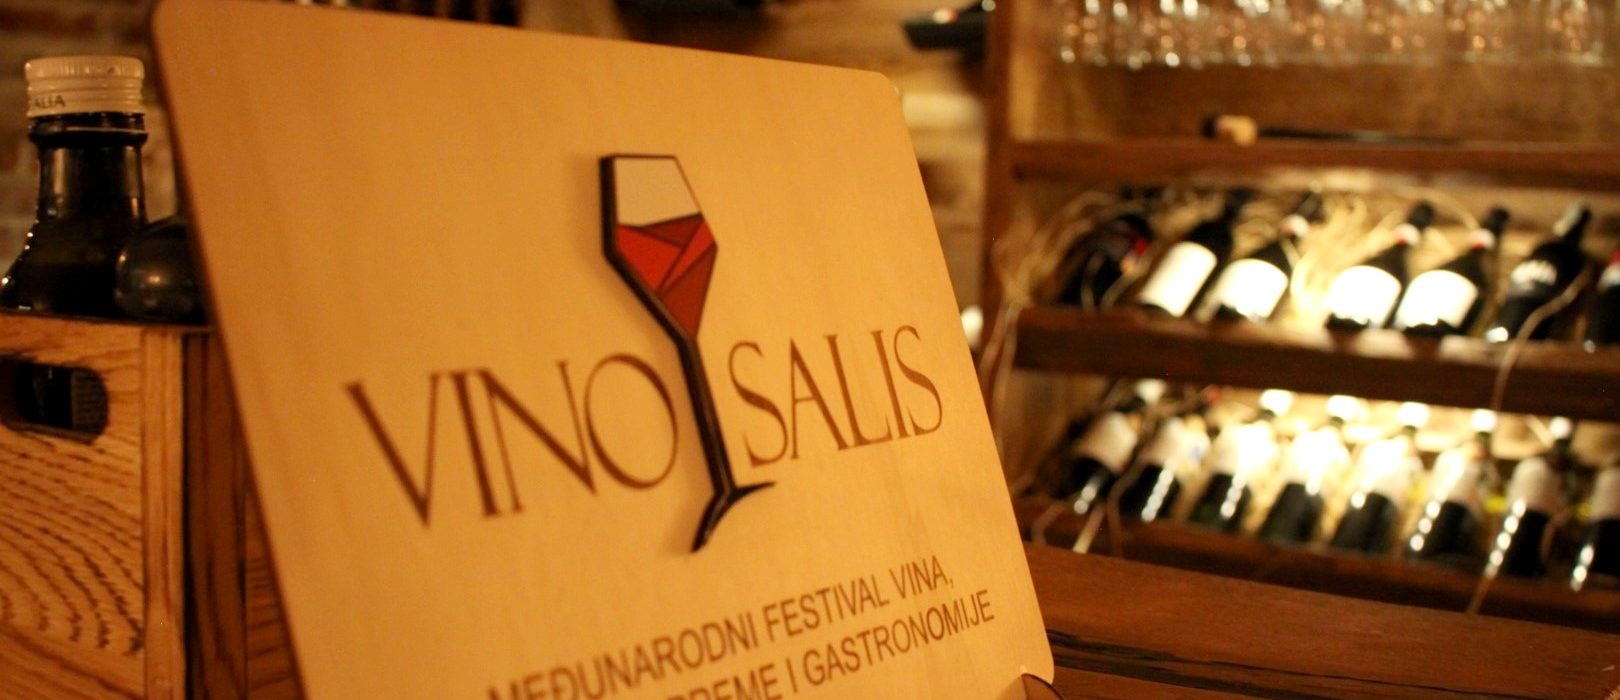 NAJAVLJUJEMO: Više od 70 vinarija na prvom Festivalu VinoSalis 2018